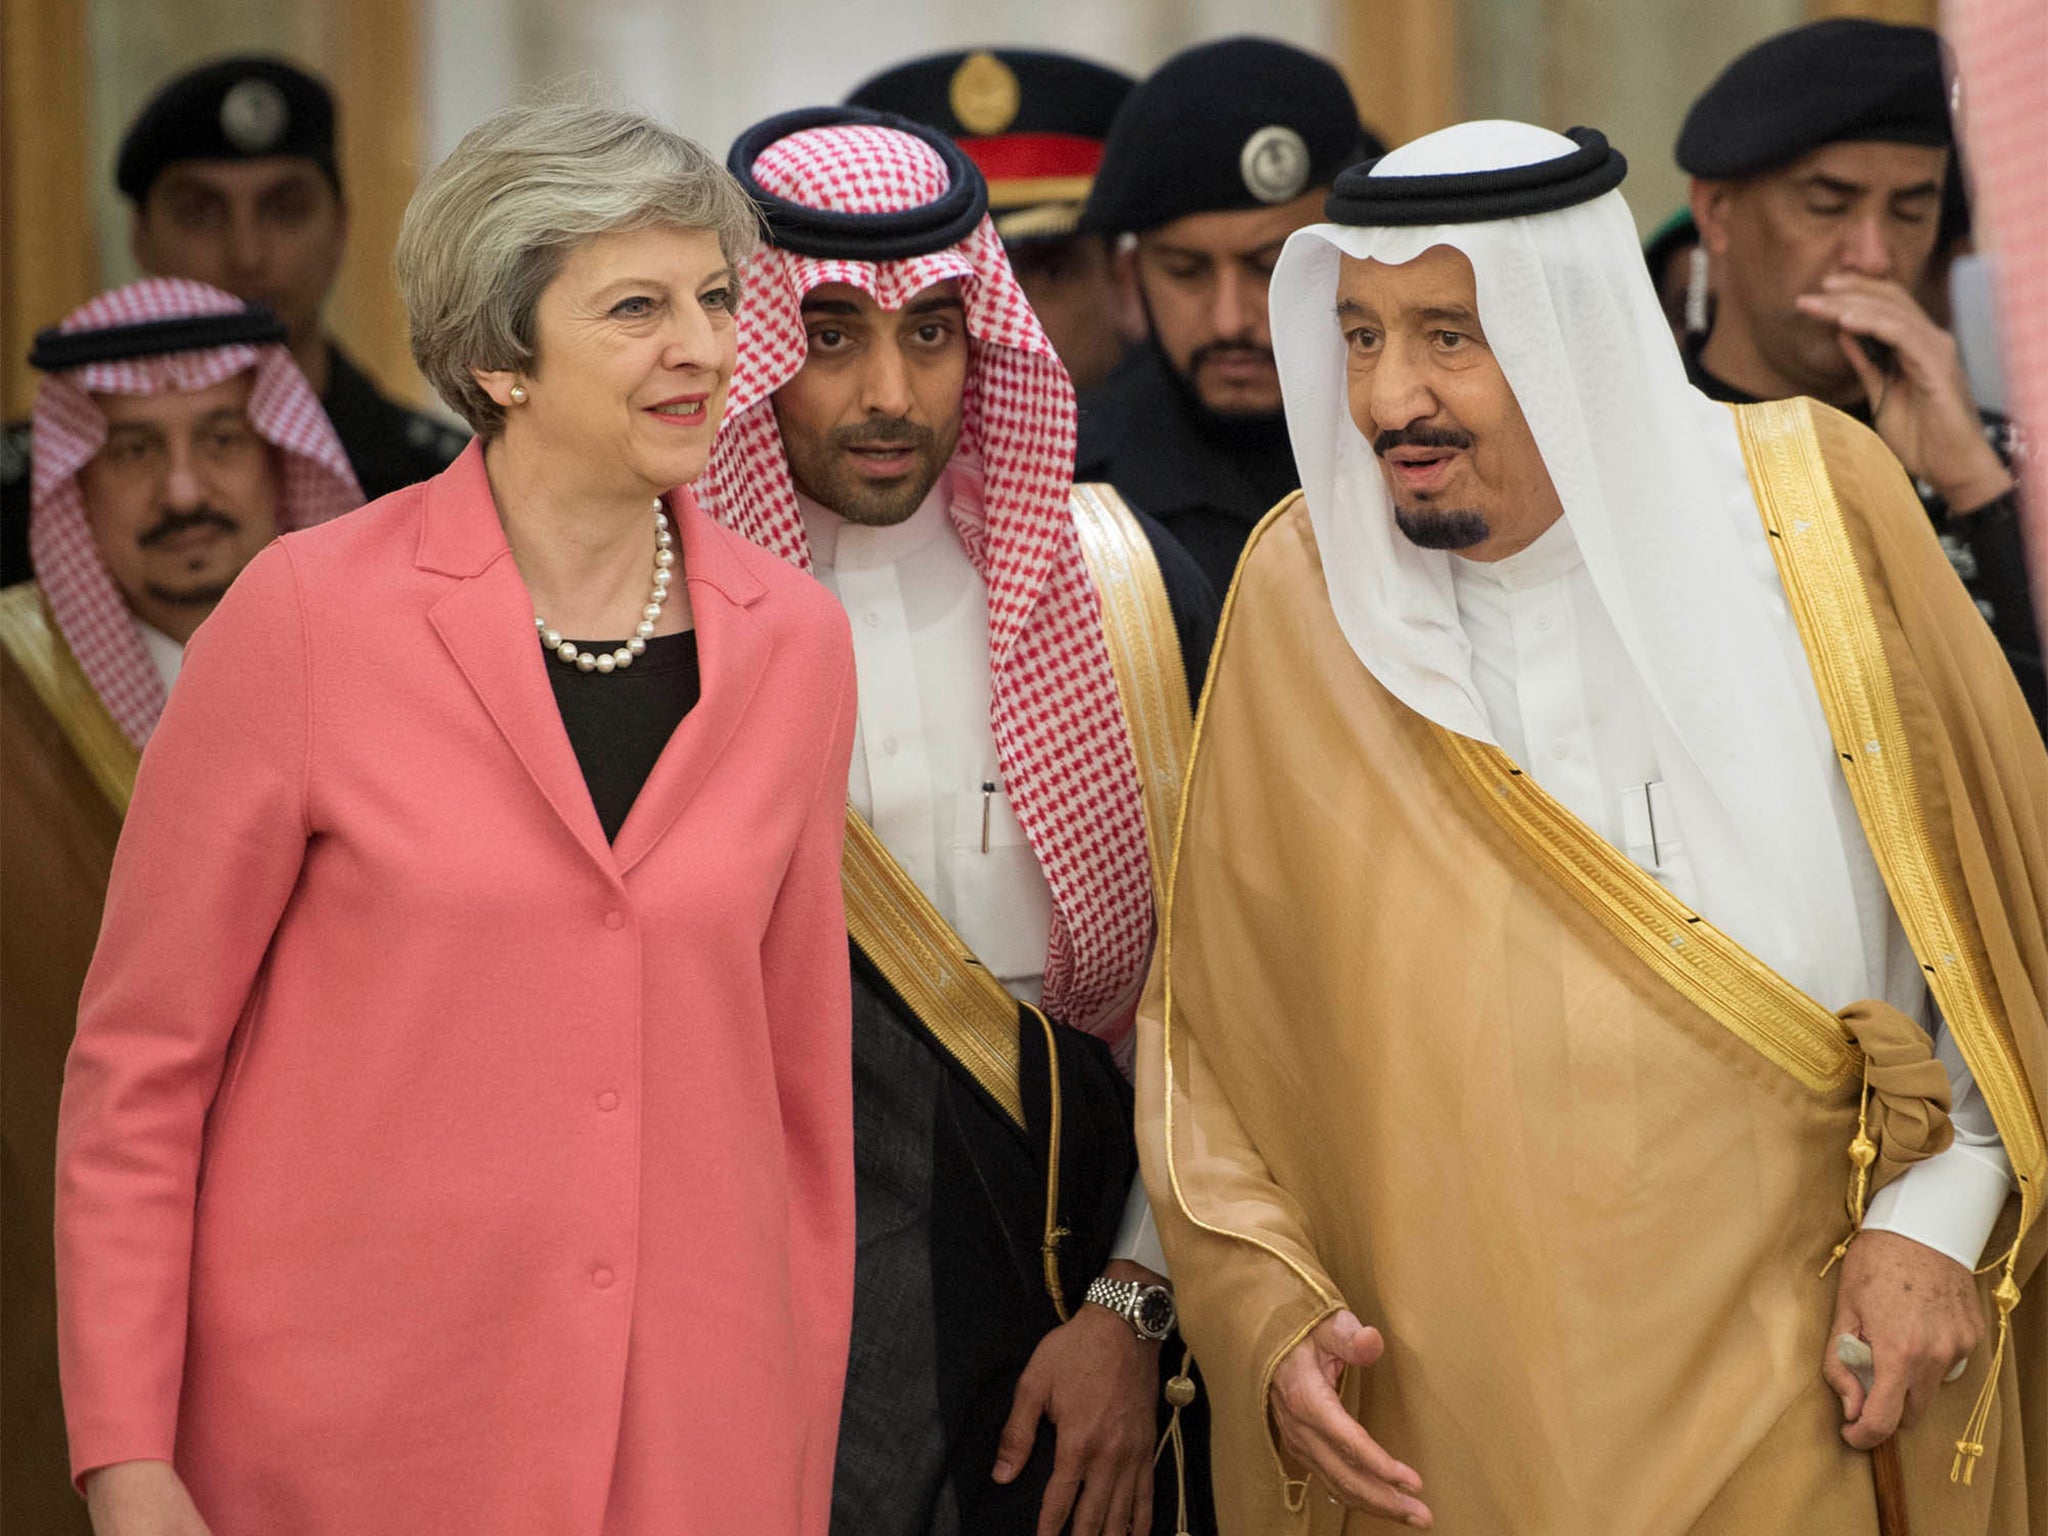 Saudi Arabia's King Salman bin Abdulaziz Al Saud welcomes British Prime Minister Theresa May in Riyadh, Saudi Arabia, in April